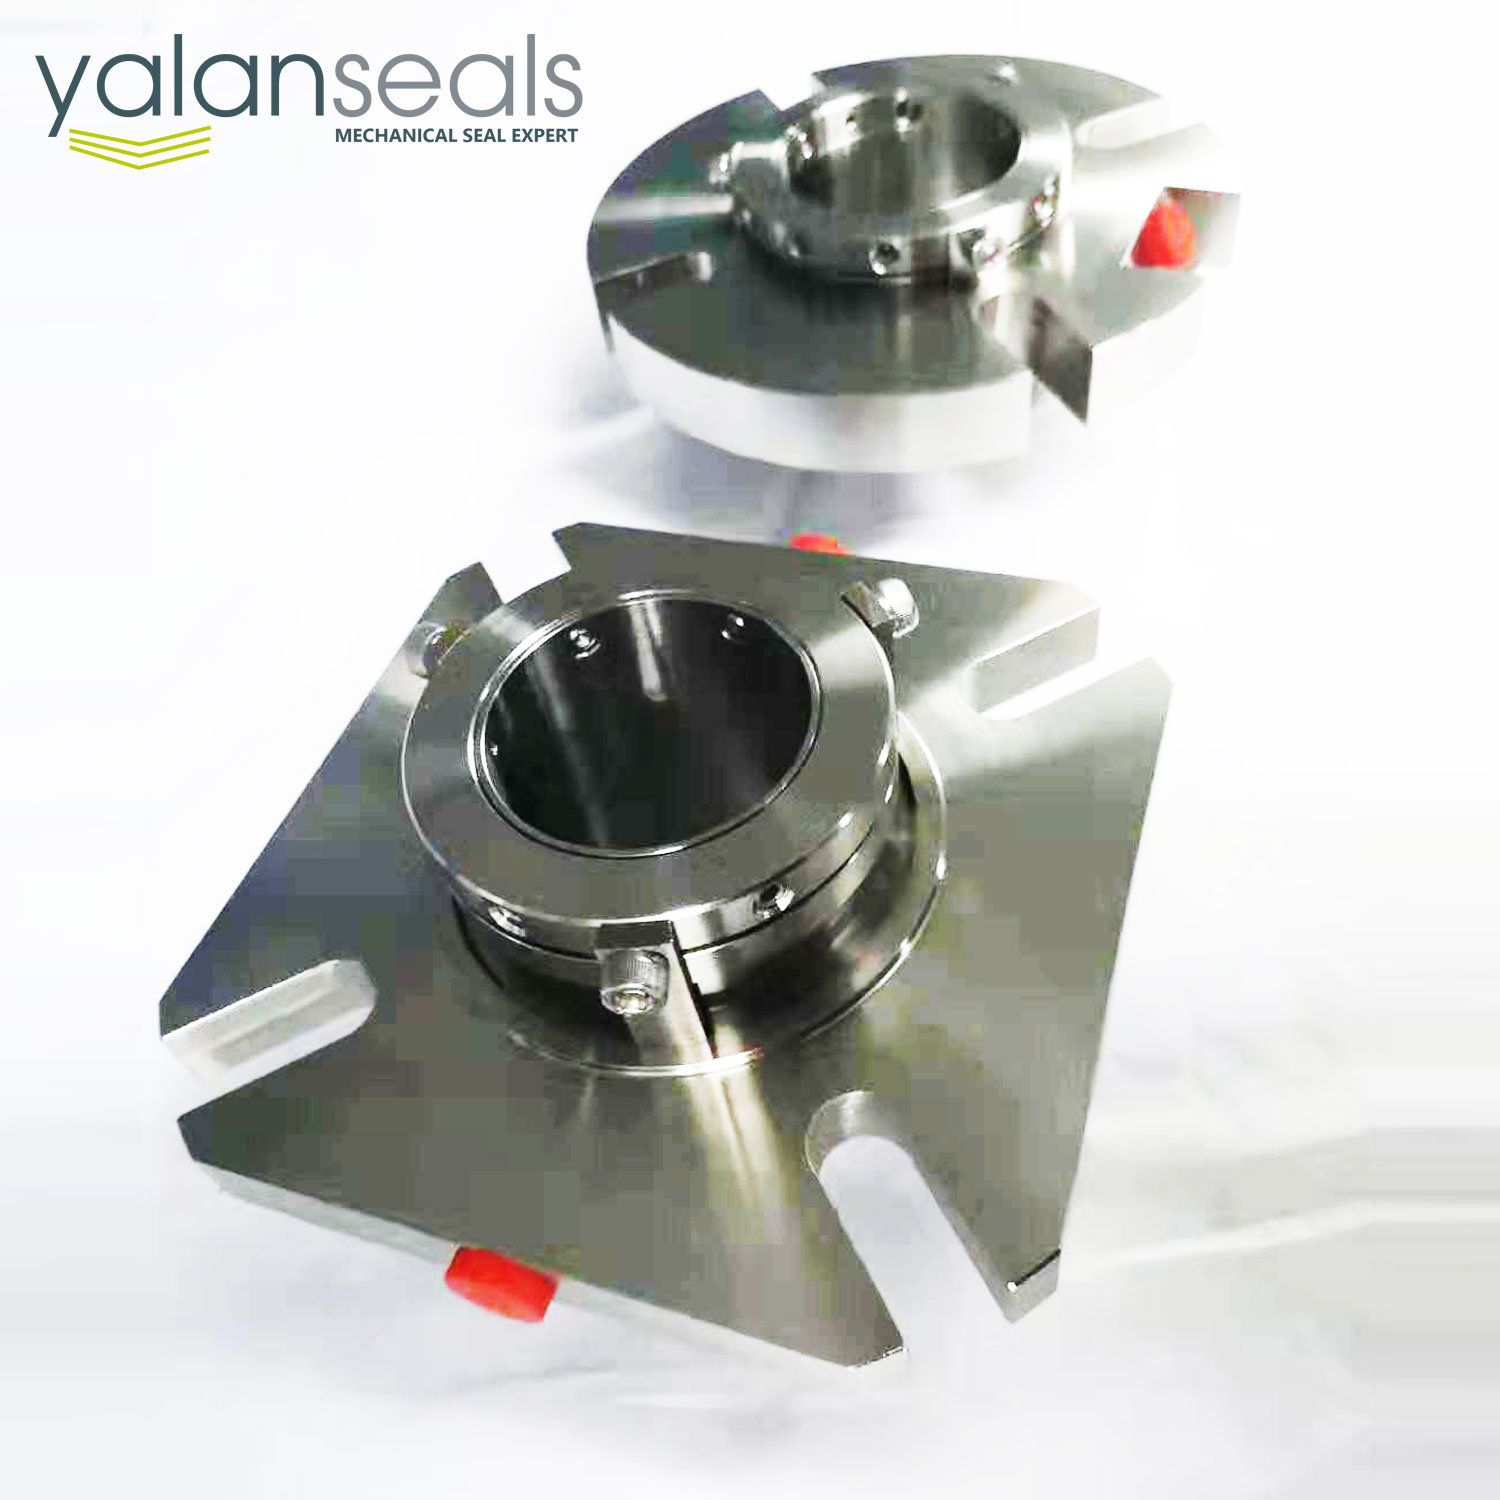 YALAN Retrofit Mechanical Seals for AES CDSA Double Cartridge Seals for Pulp Pumps and Chemical Pumps